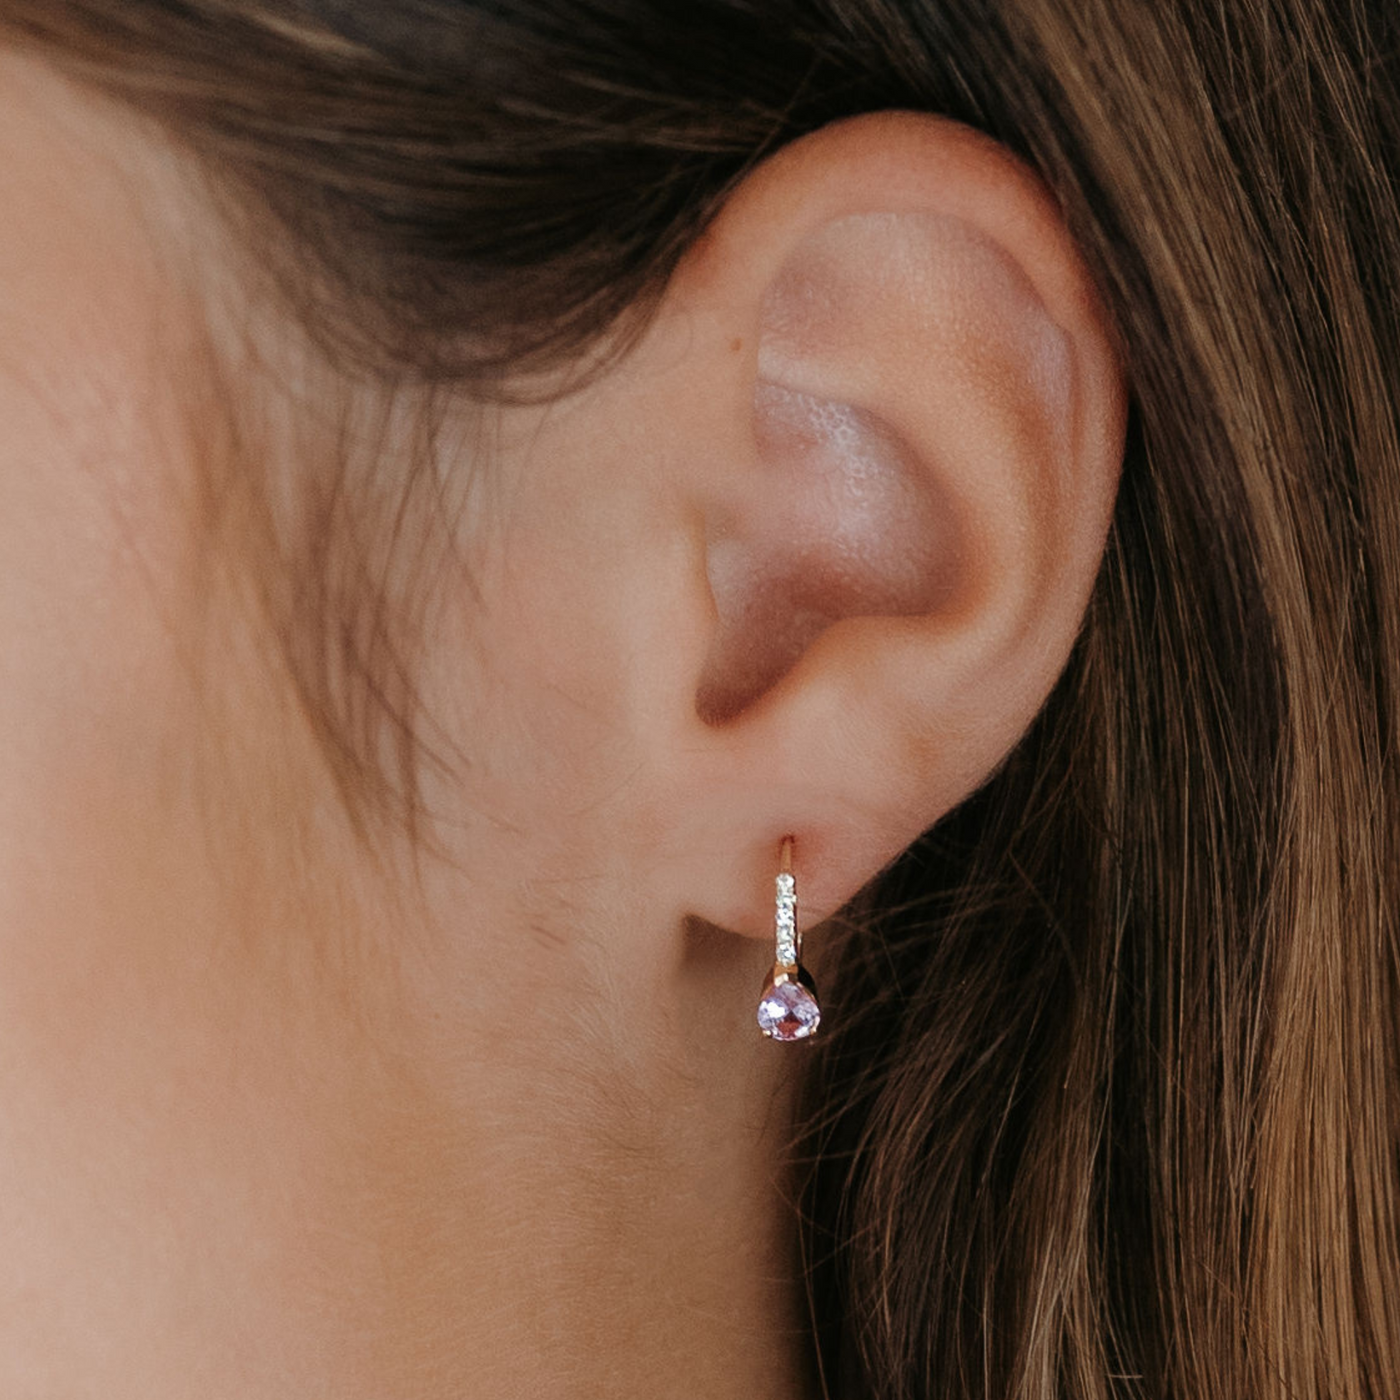 pink sapphire and diamond huggie earrings